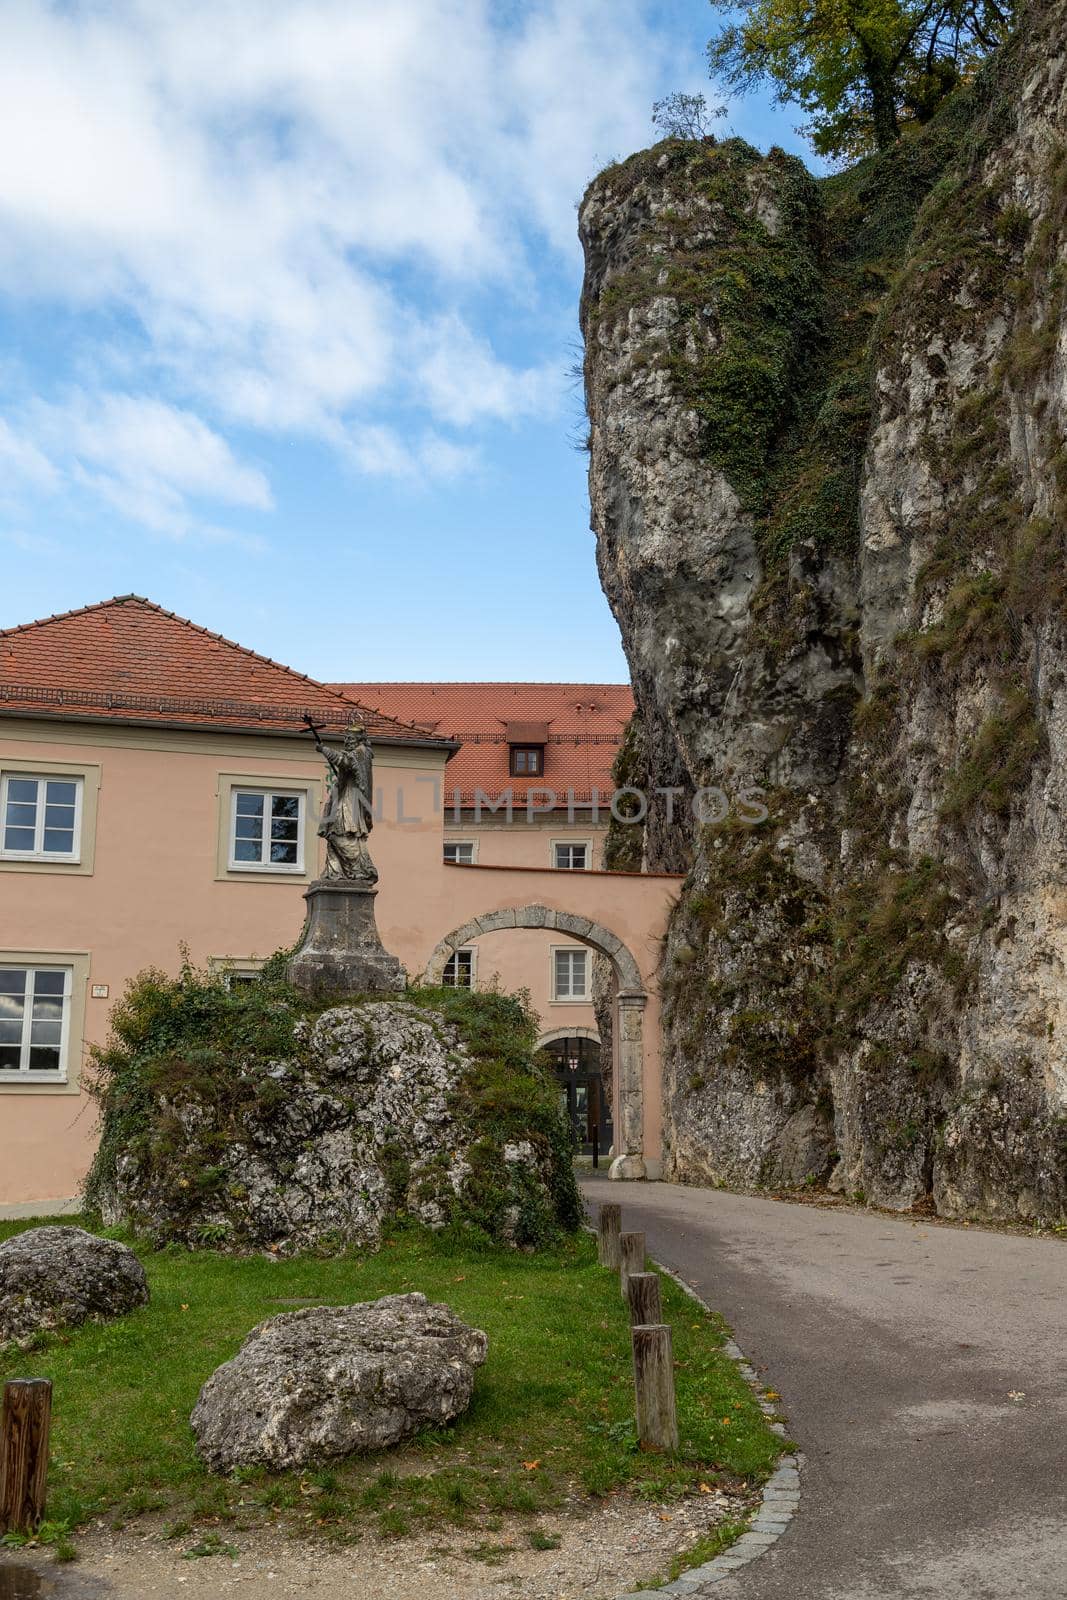 Monastery Weltenburg near Kelheim, Bavaria, Germany by reinerc